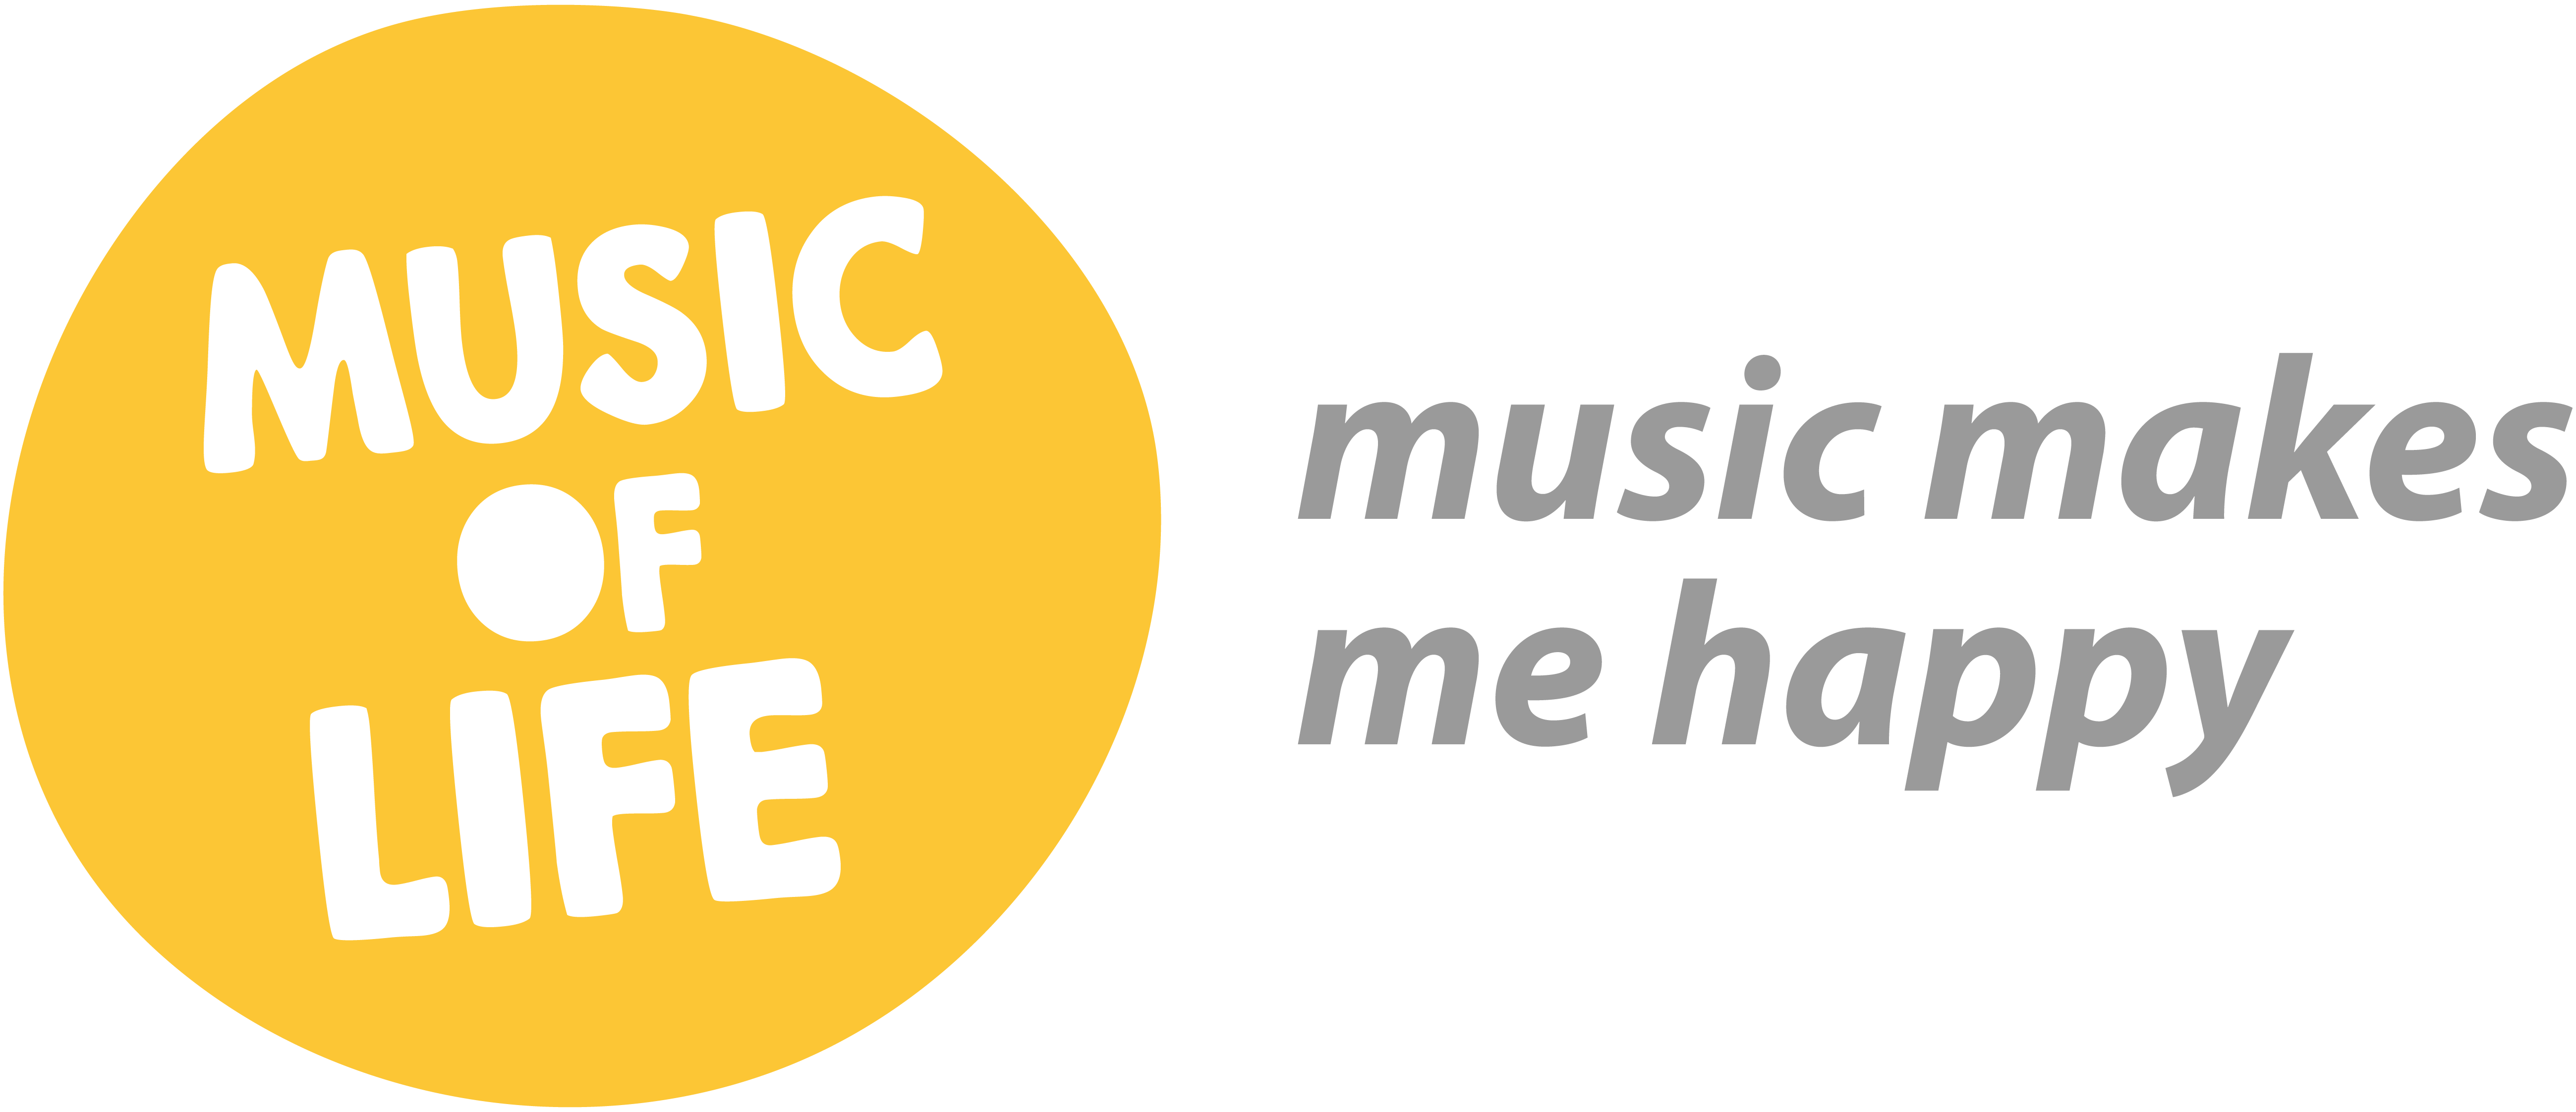 Music of Life Foundation Logo